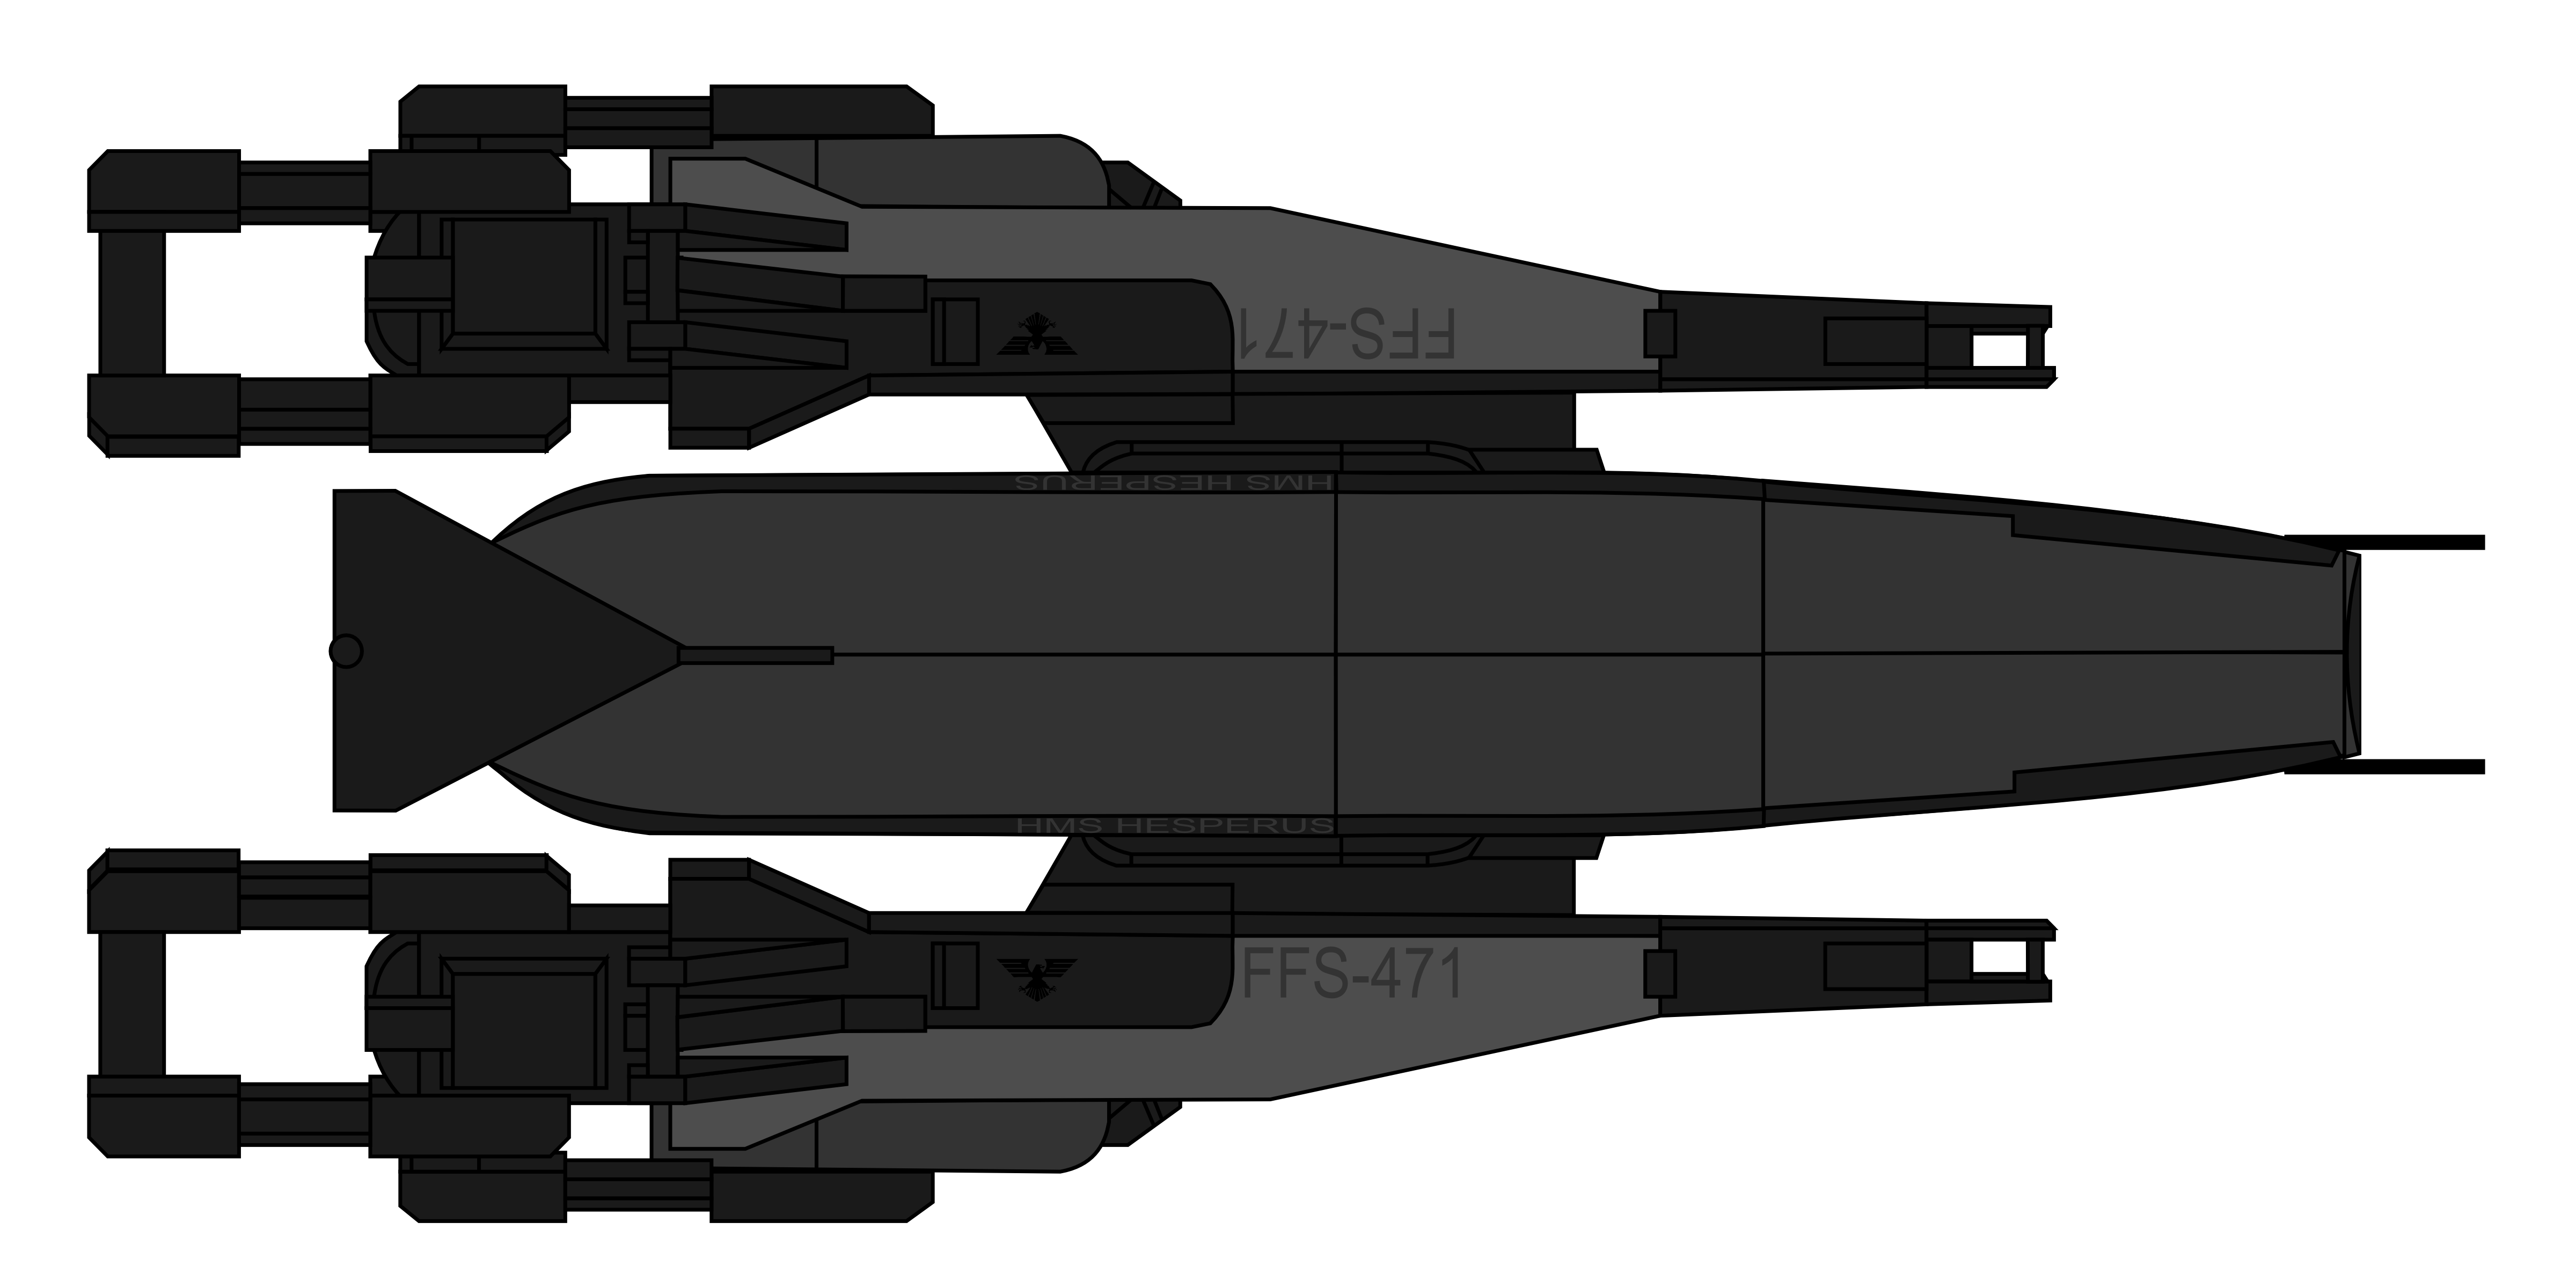 Hesperus-class Stealth Frigate - Halo Legends Wiki